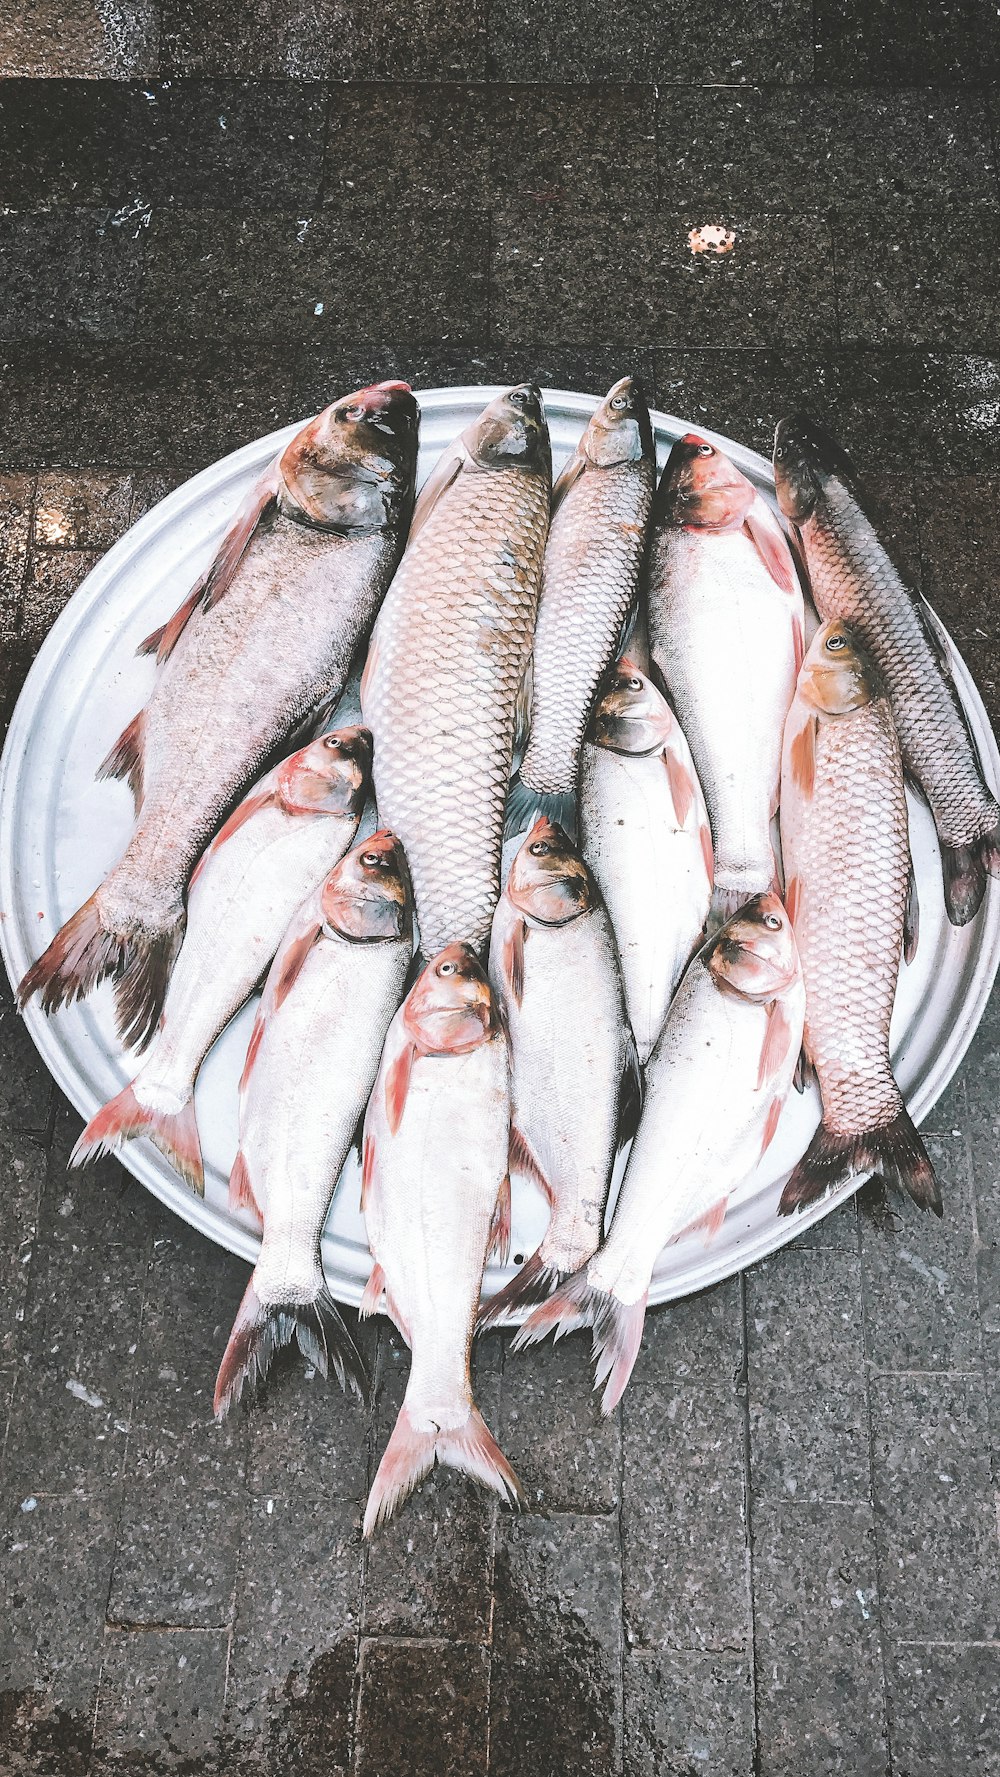 Gray fish in white plastic bucket photo – Free Brown Image on Unsplash